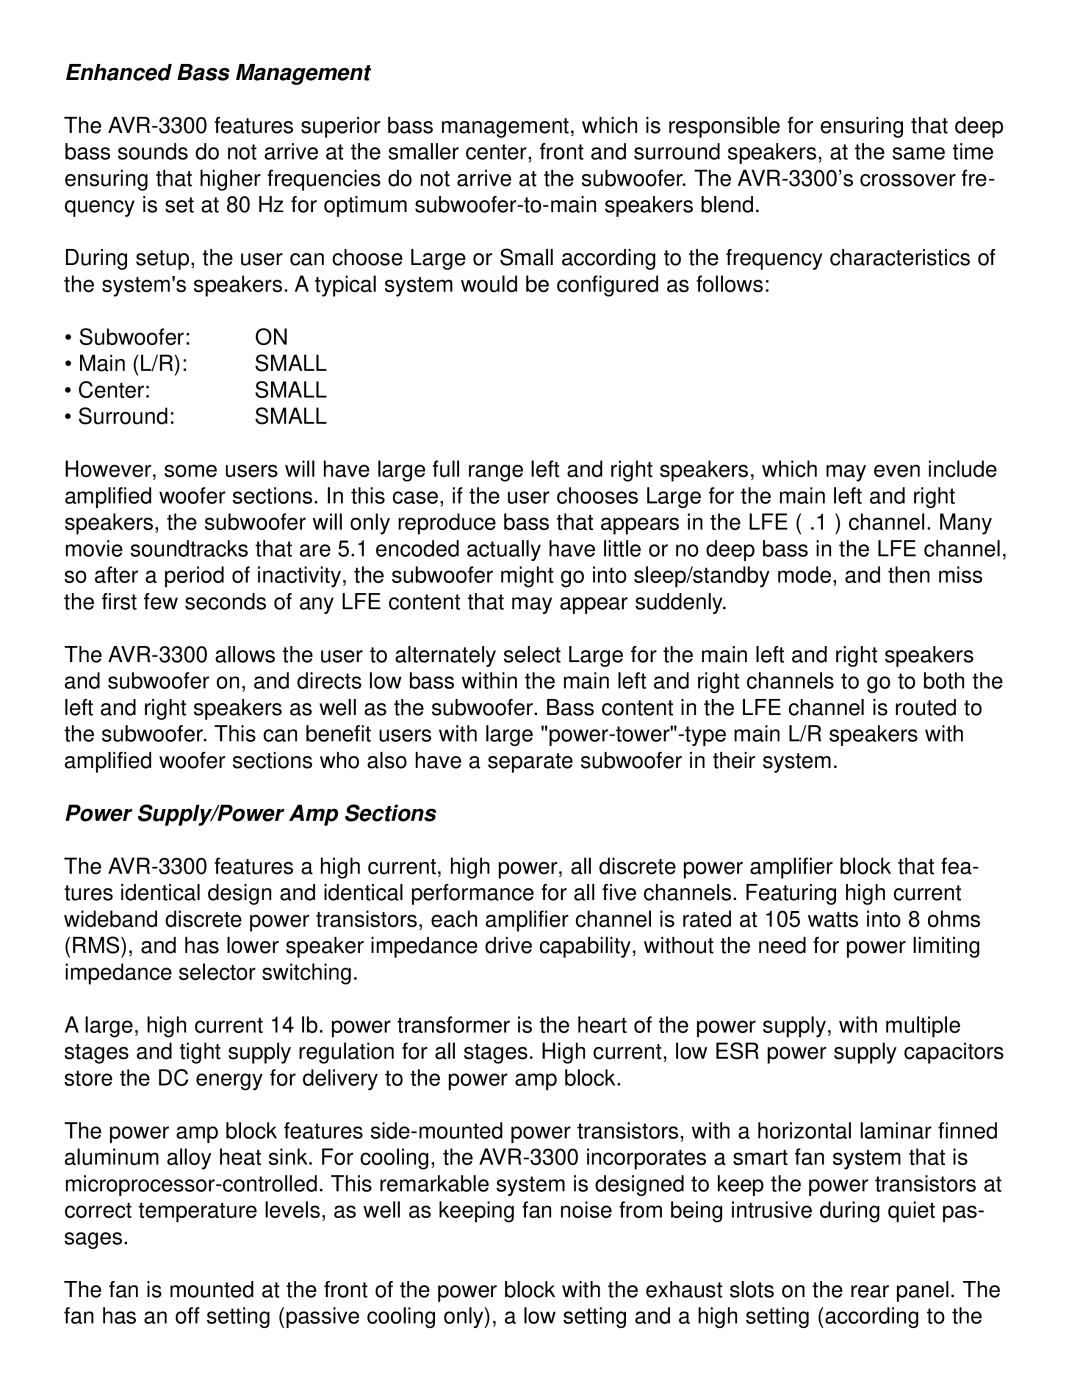 Denon AVR-3300 manual Enhanced Bass Management, Power Supply/Power Amp Sections 